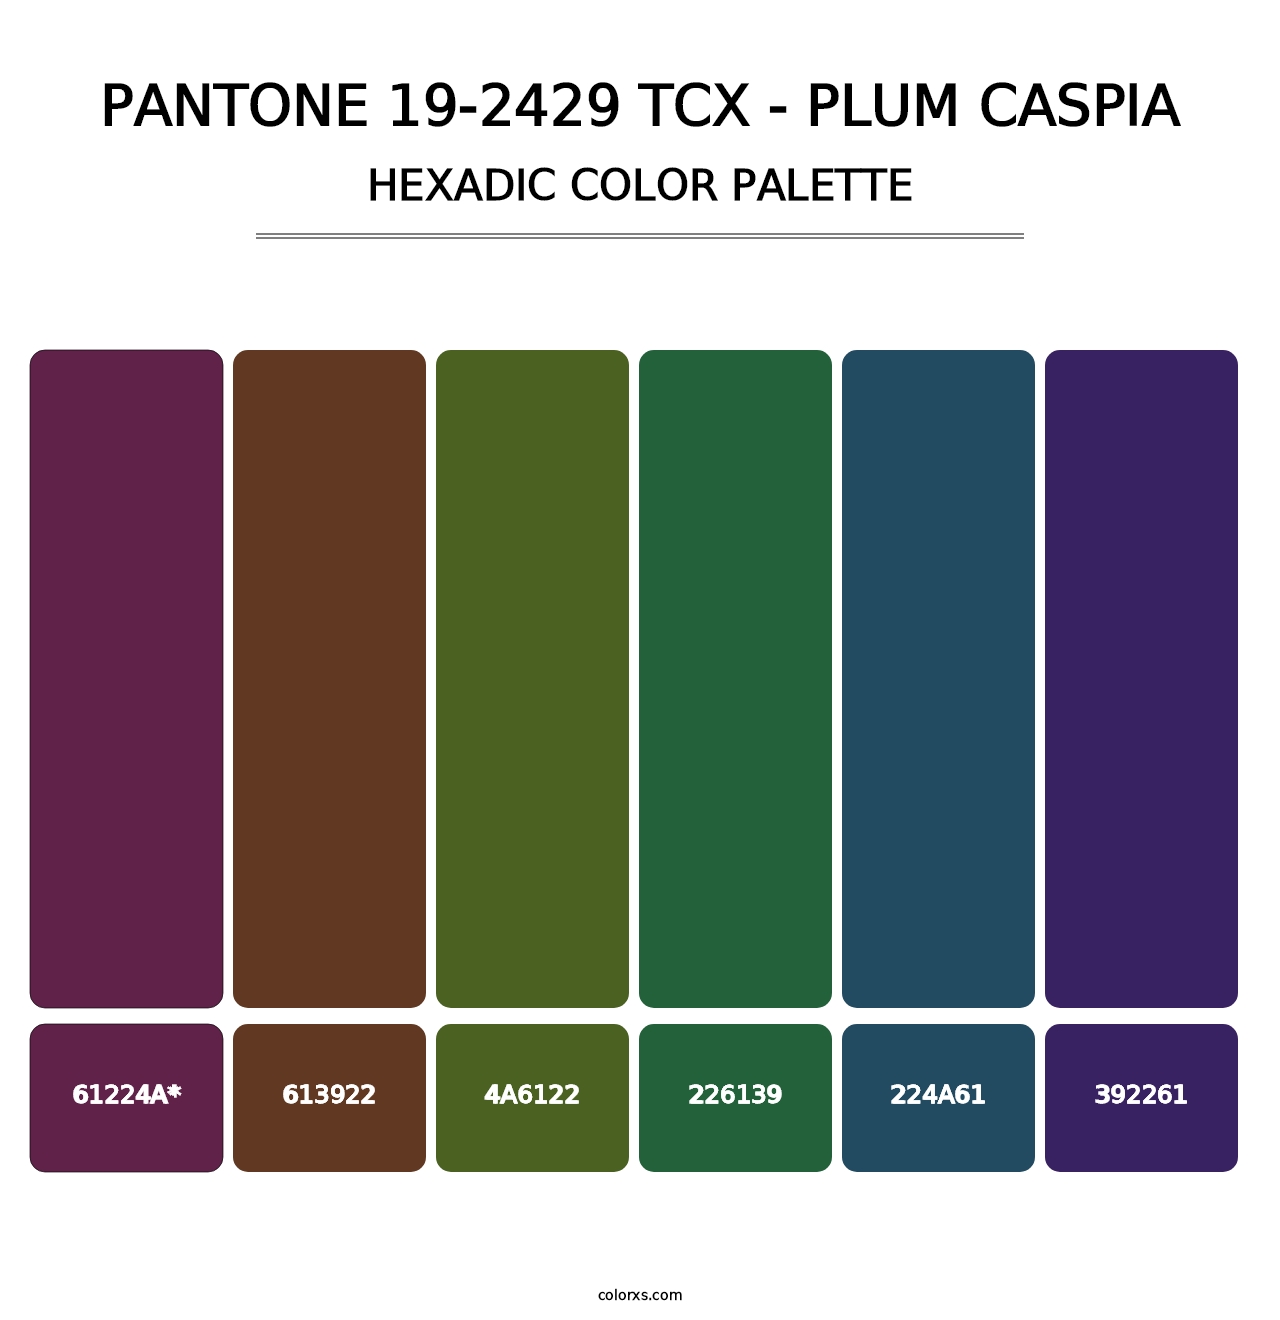 PANTONE 19-2429 TCX - Plum Caspia - Hexadic Color Palette